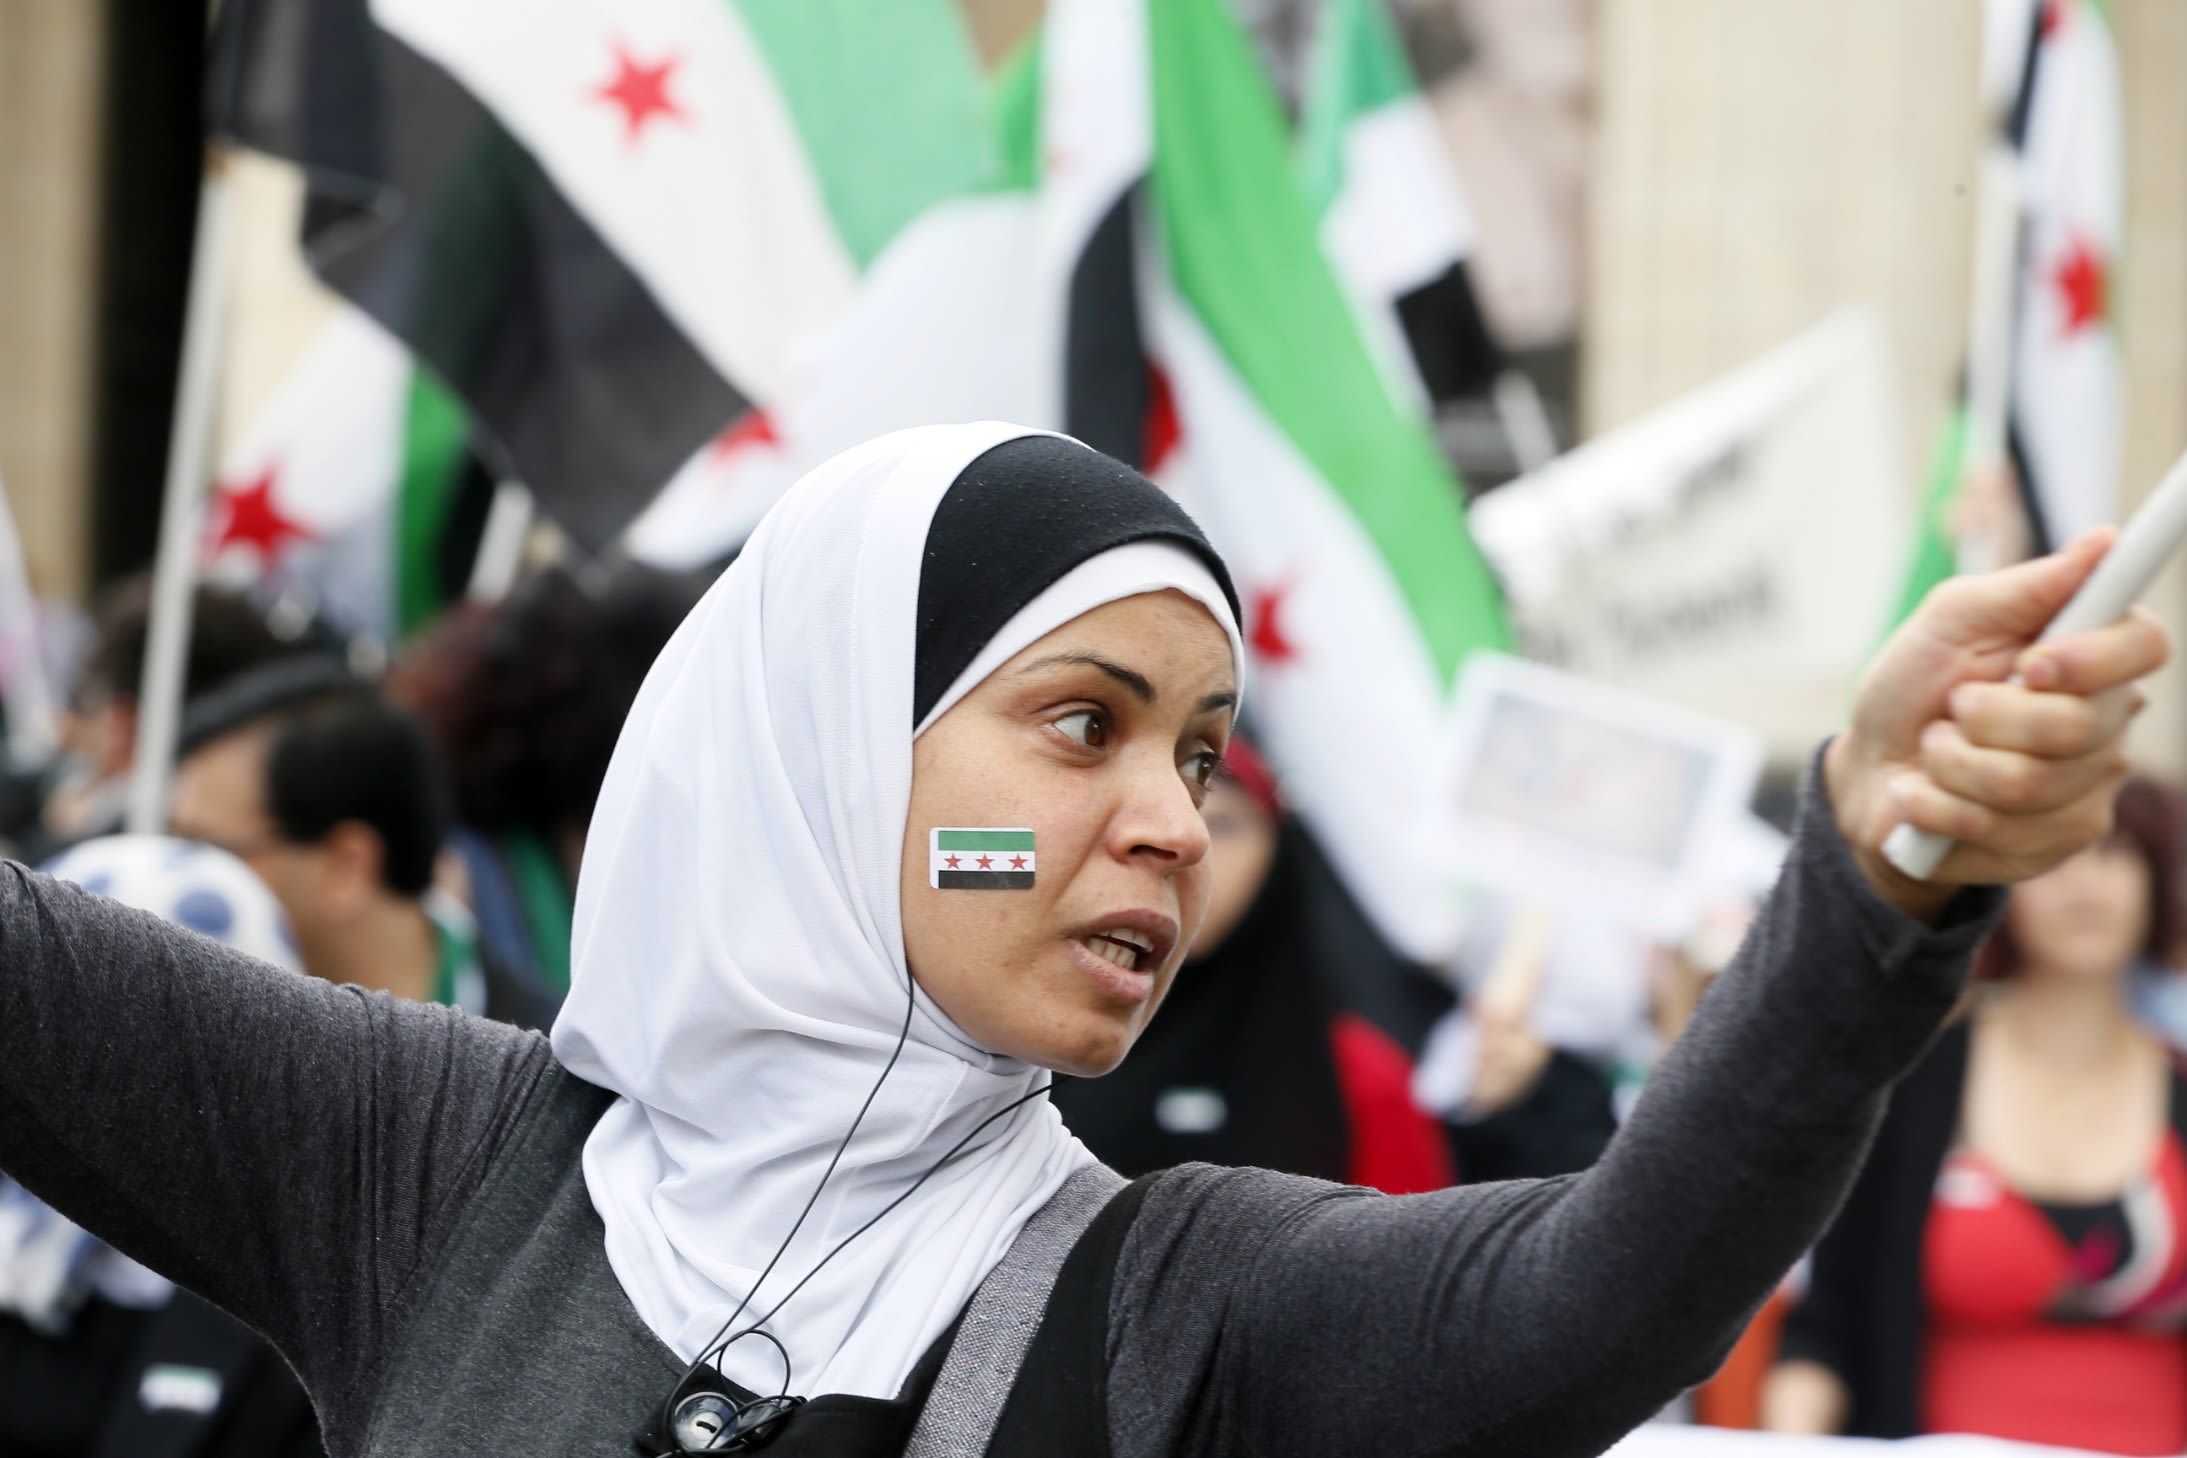 https://media.cnn.com/api/v1/images/stellar/prod/130307171452-woman-at-anti-syrian-regime-protest.jpg?q=w_2187,h_1458,x_0,y_0,c_fill